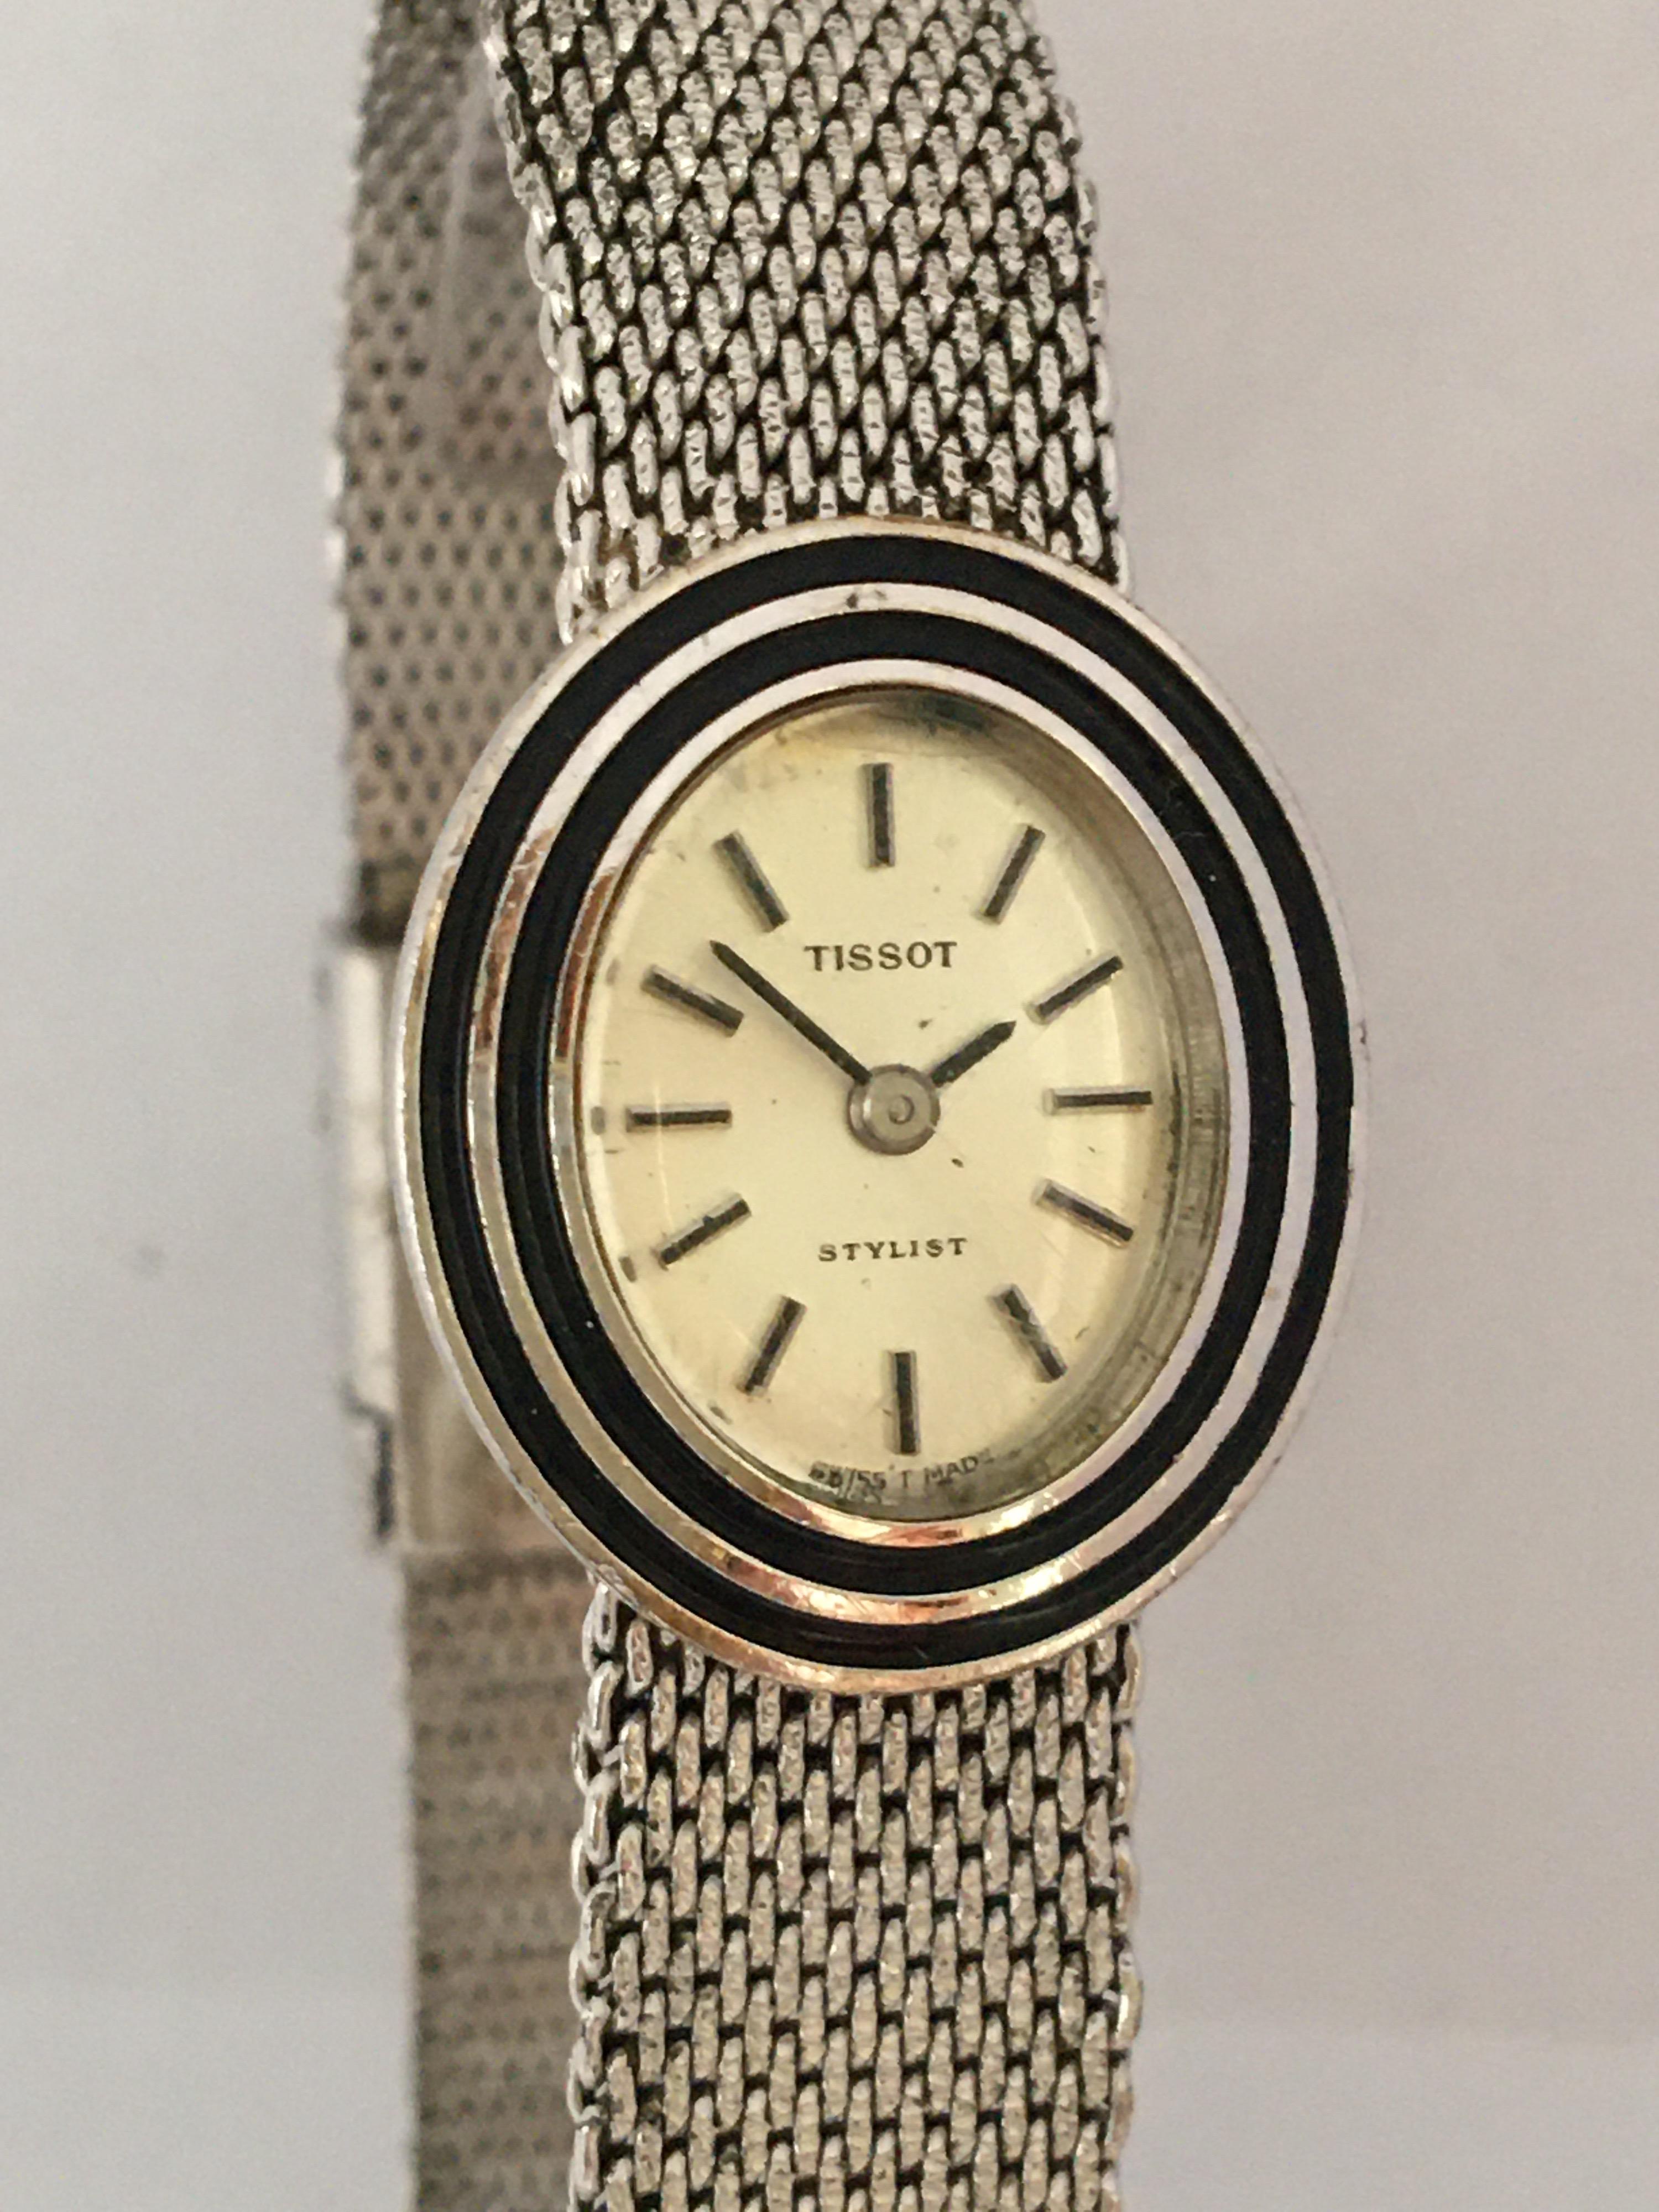 Vintage 1970s TISSOT Stylist Mechanical Watch 7